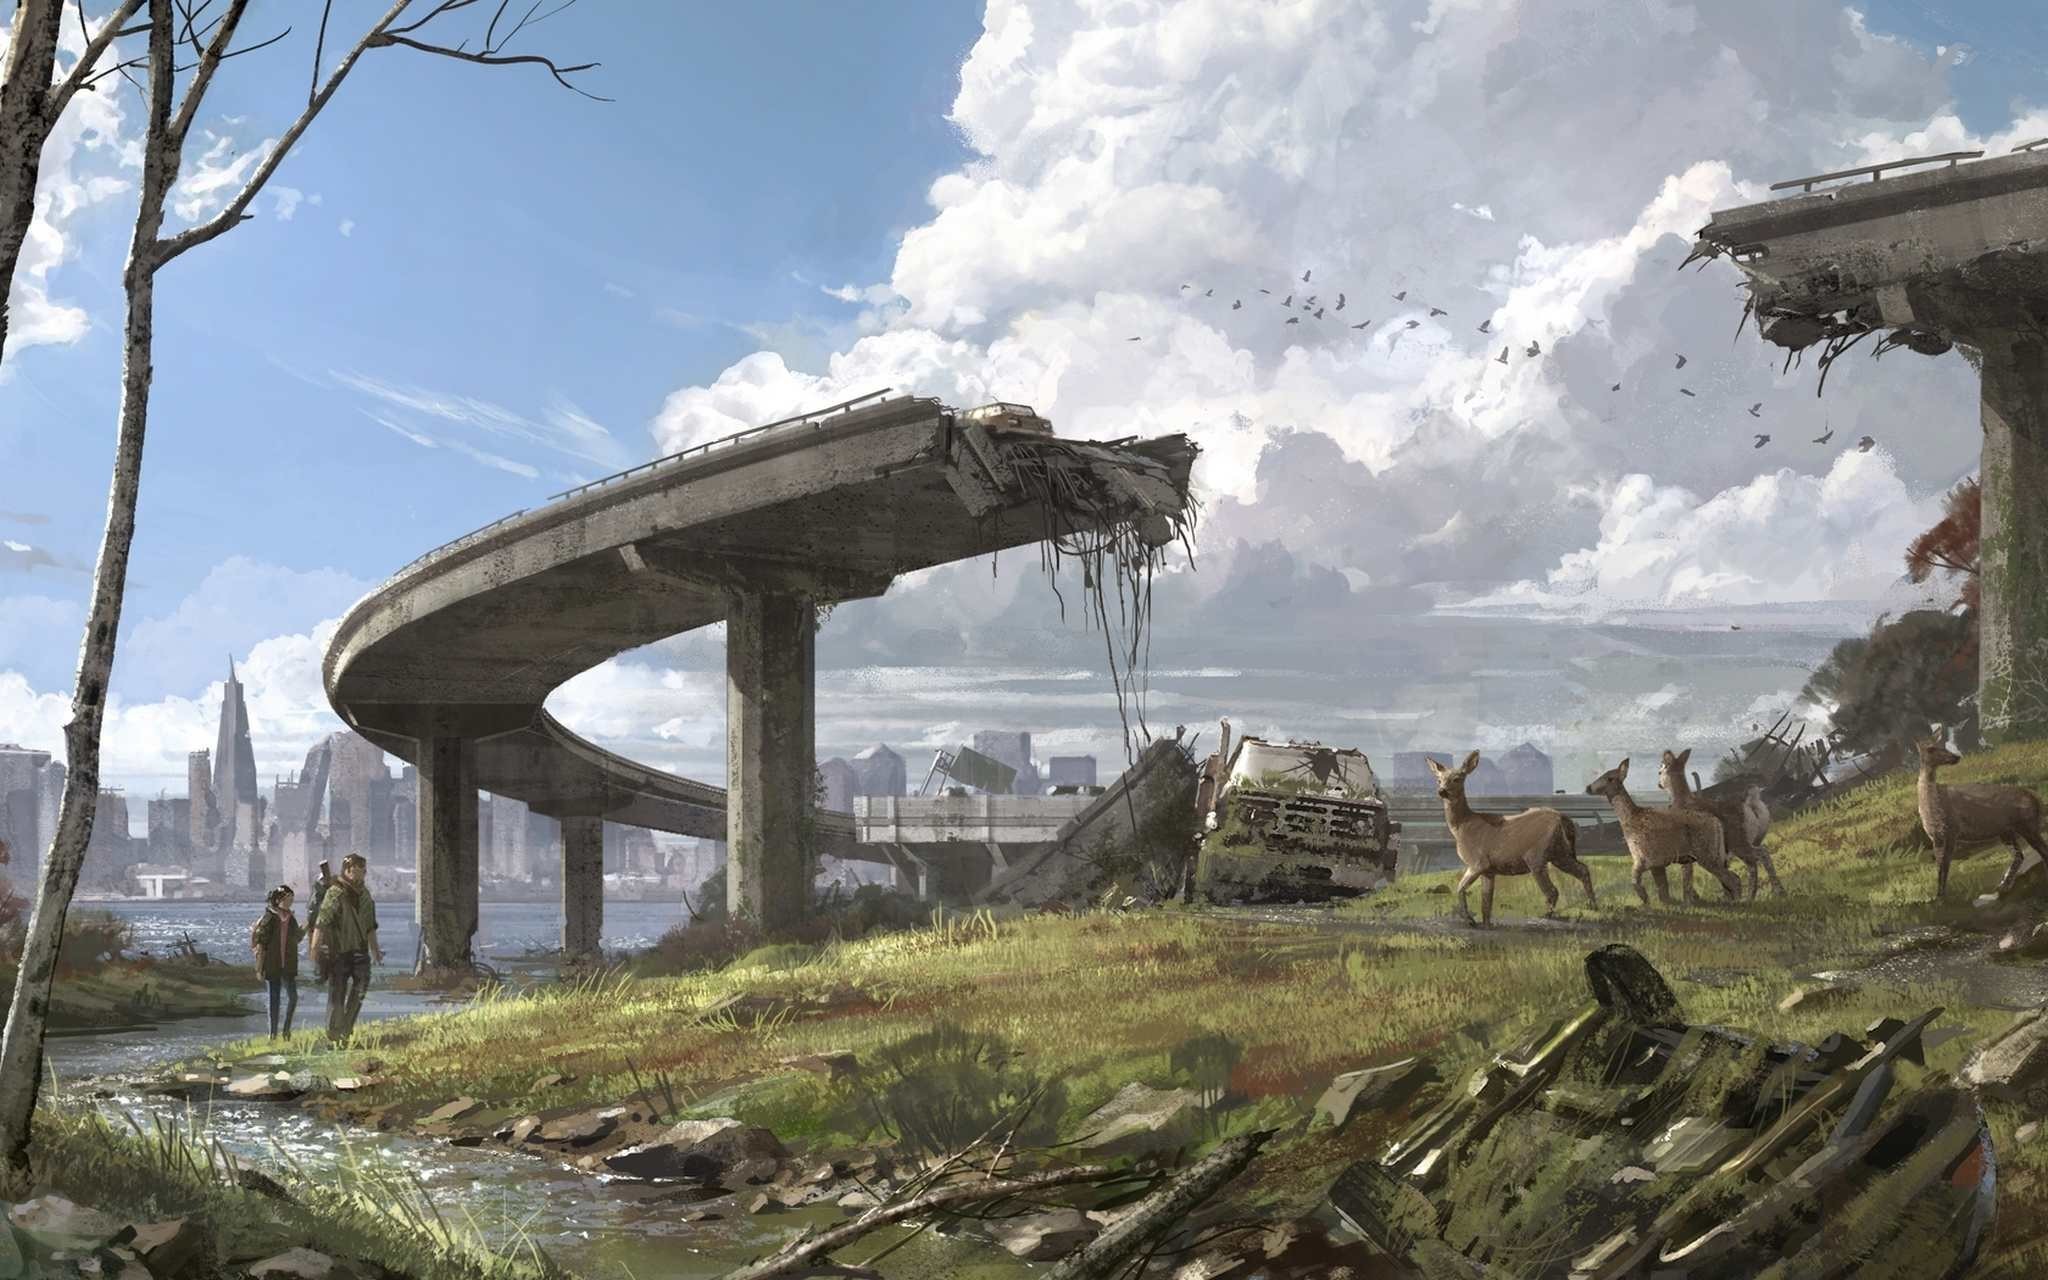 General 2048x1280 apocalyptic artwork futuristic ruins science fiction bridge deer animals sky clouds The Last of Us